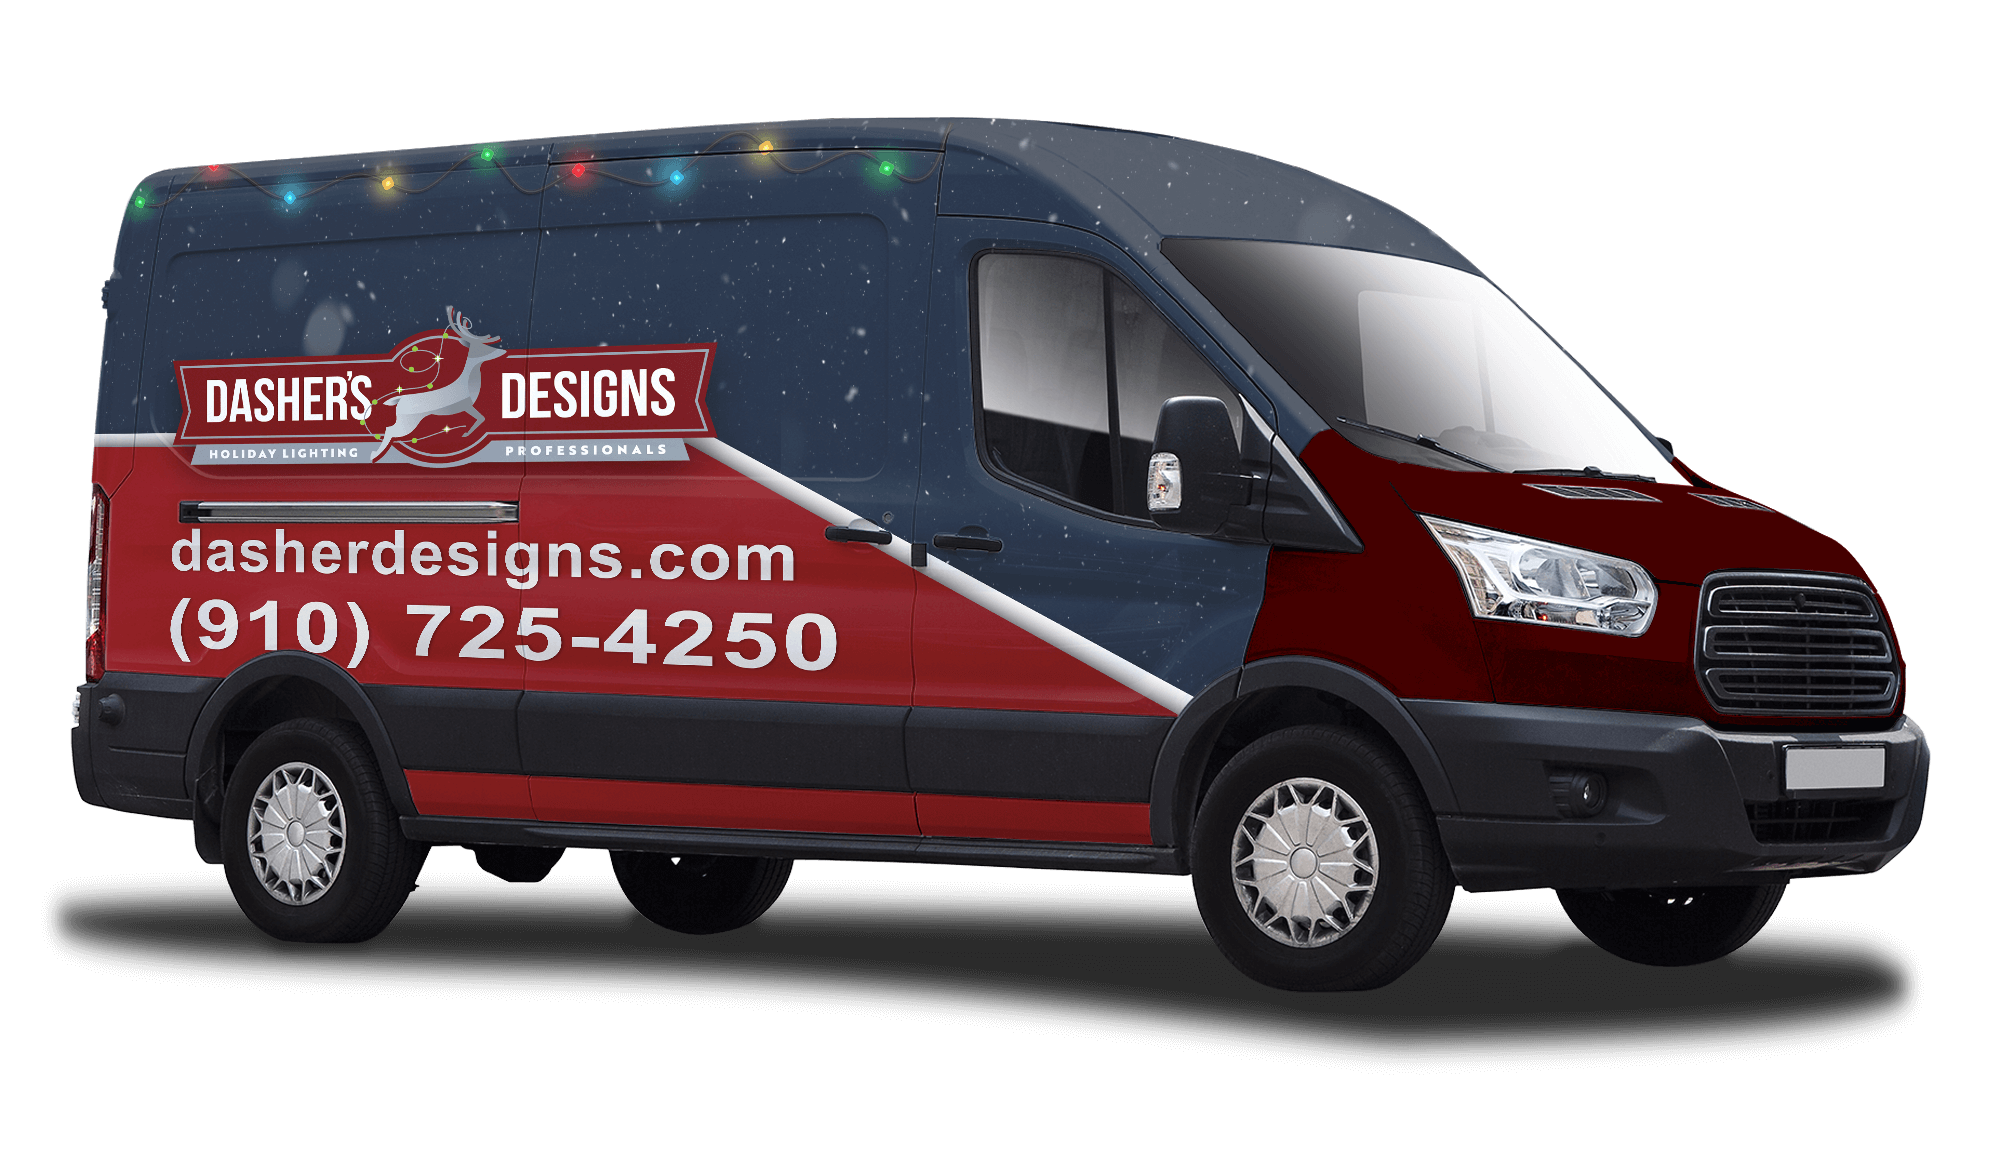 Dashers Designs Holiday Lighting and Landscape Lighting Van